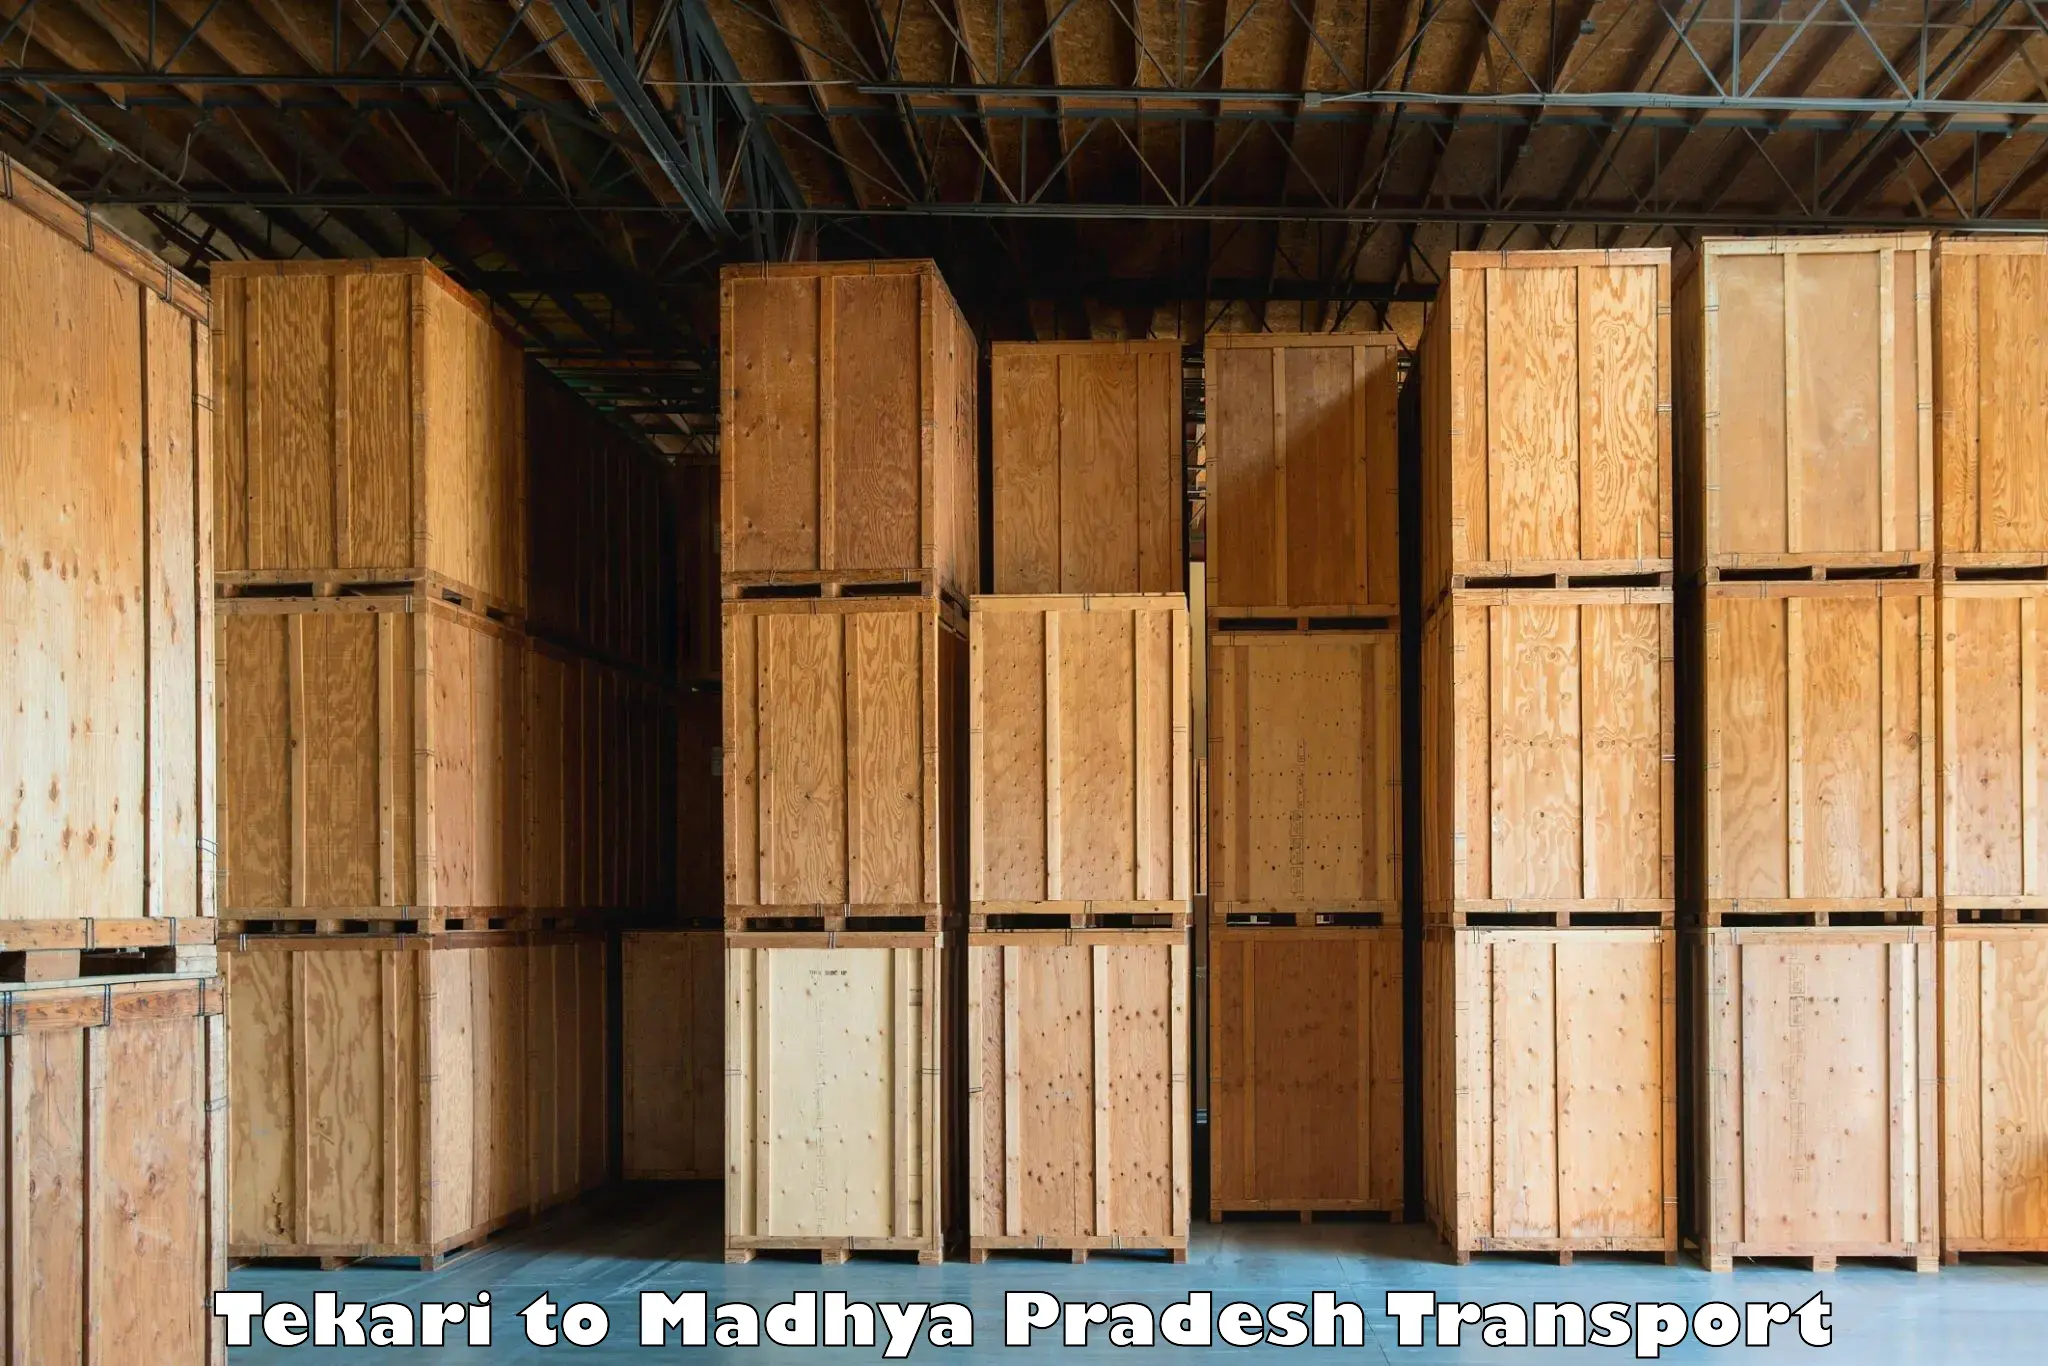 Lorry transport service Tekari to Mandla